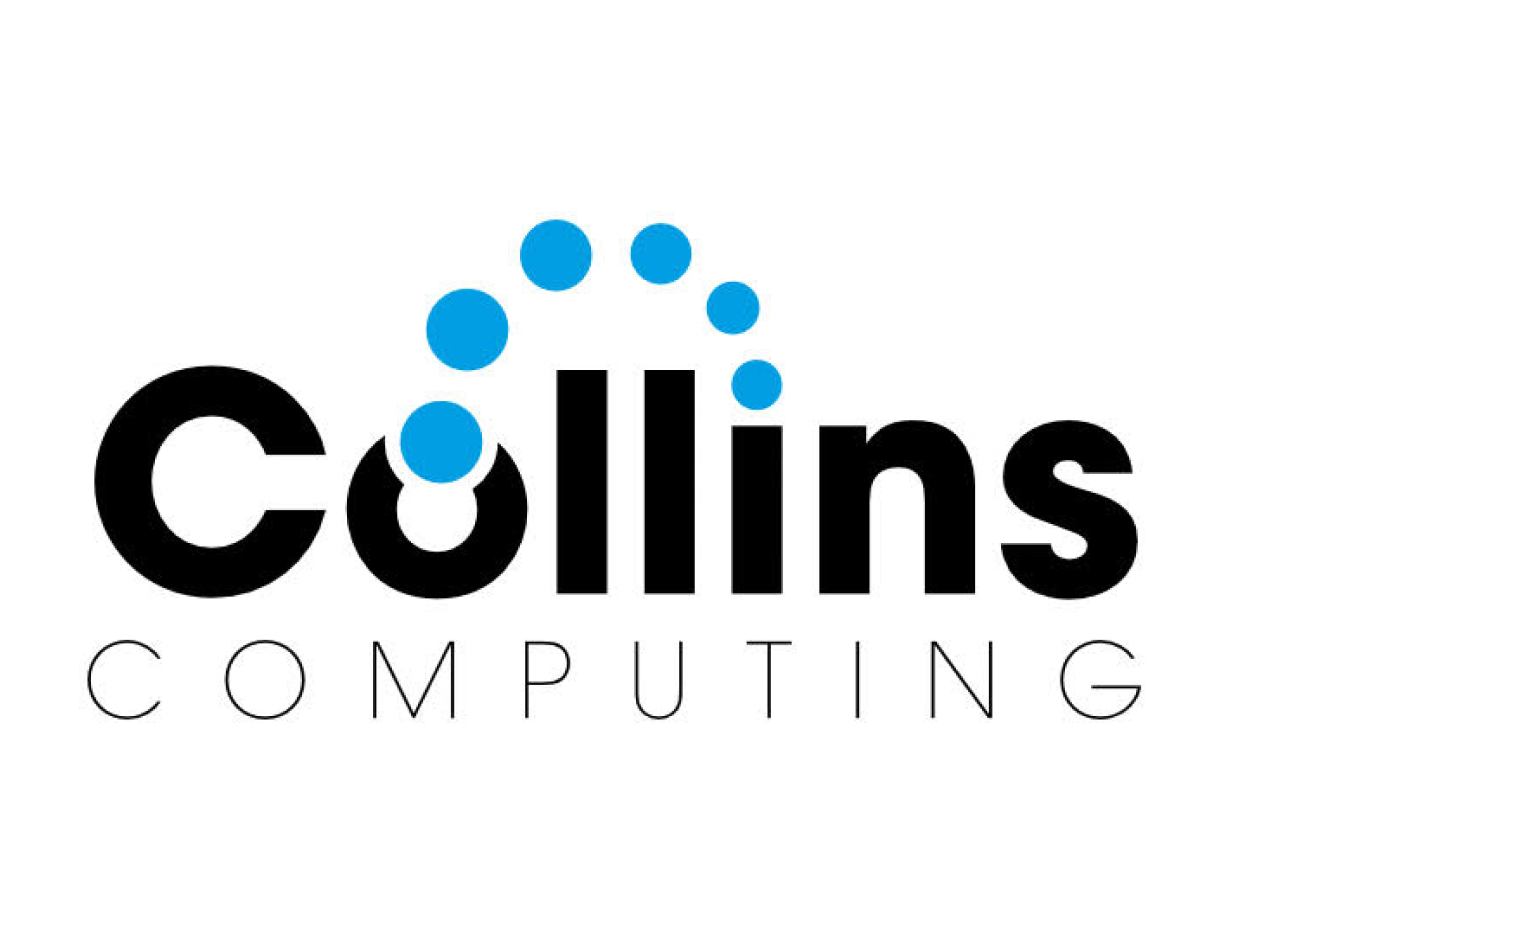 collins computing logo